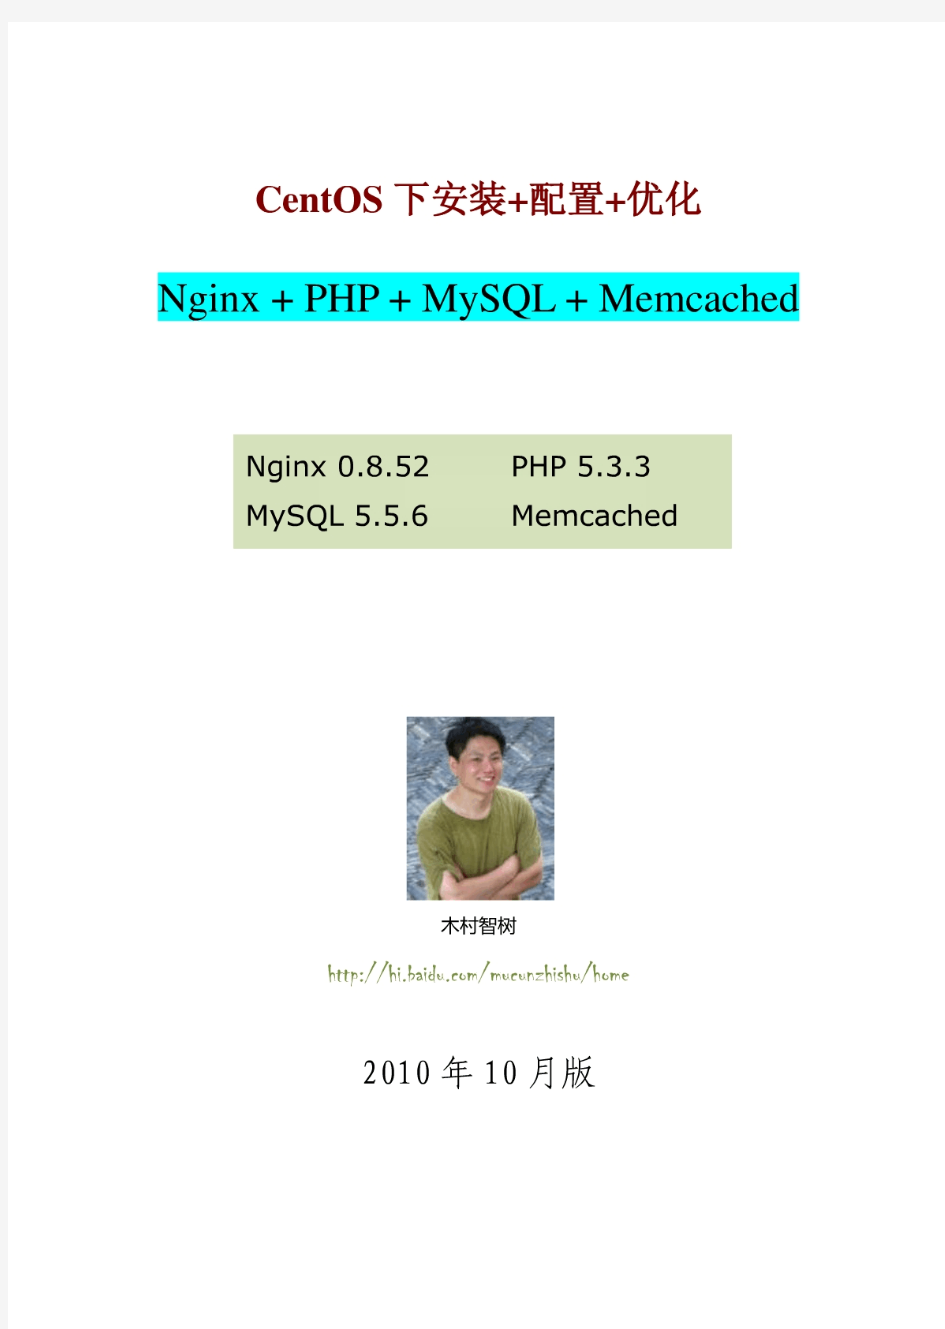 CentOS下Nginx0.8.52-PHP5.3.3-MySQL5.5.6-Memcached1.4.5安装配置优化201010版